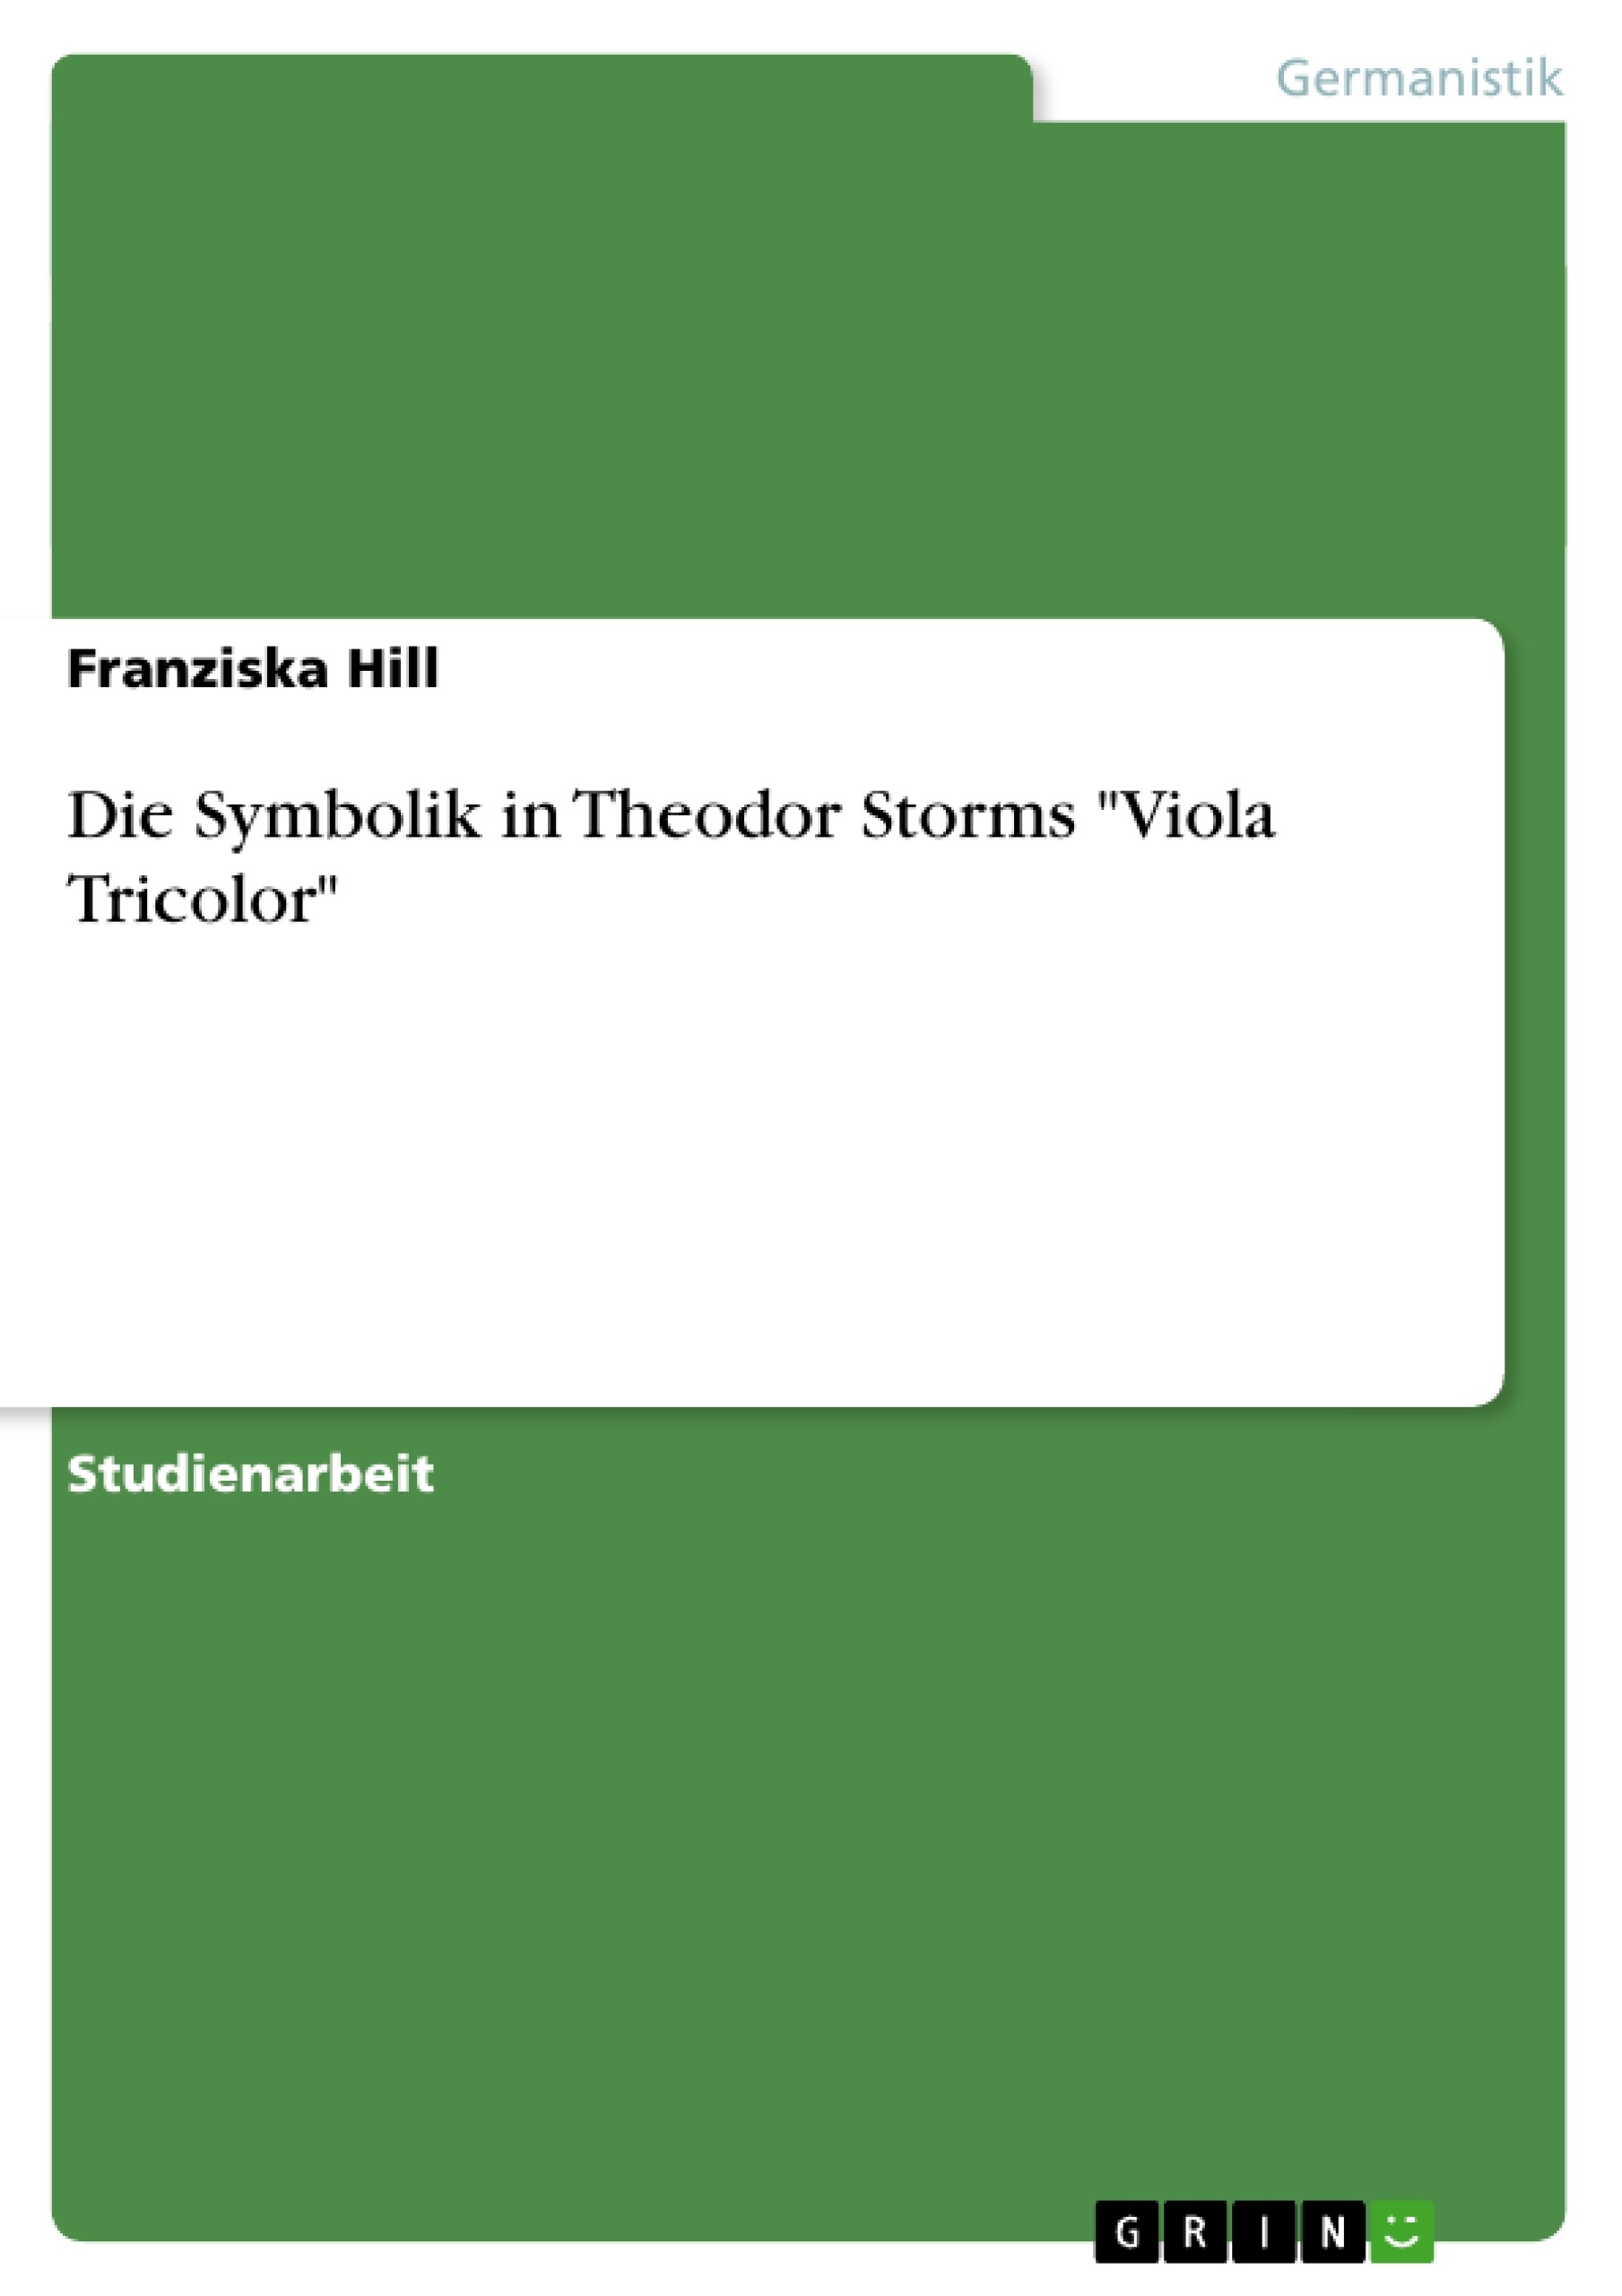 Titre: Die Symbolik in Theodor Storms "Viola Tricolor"